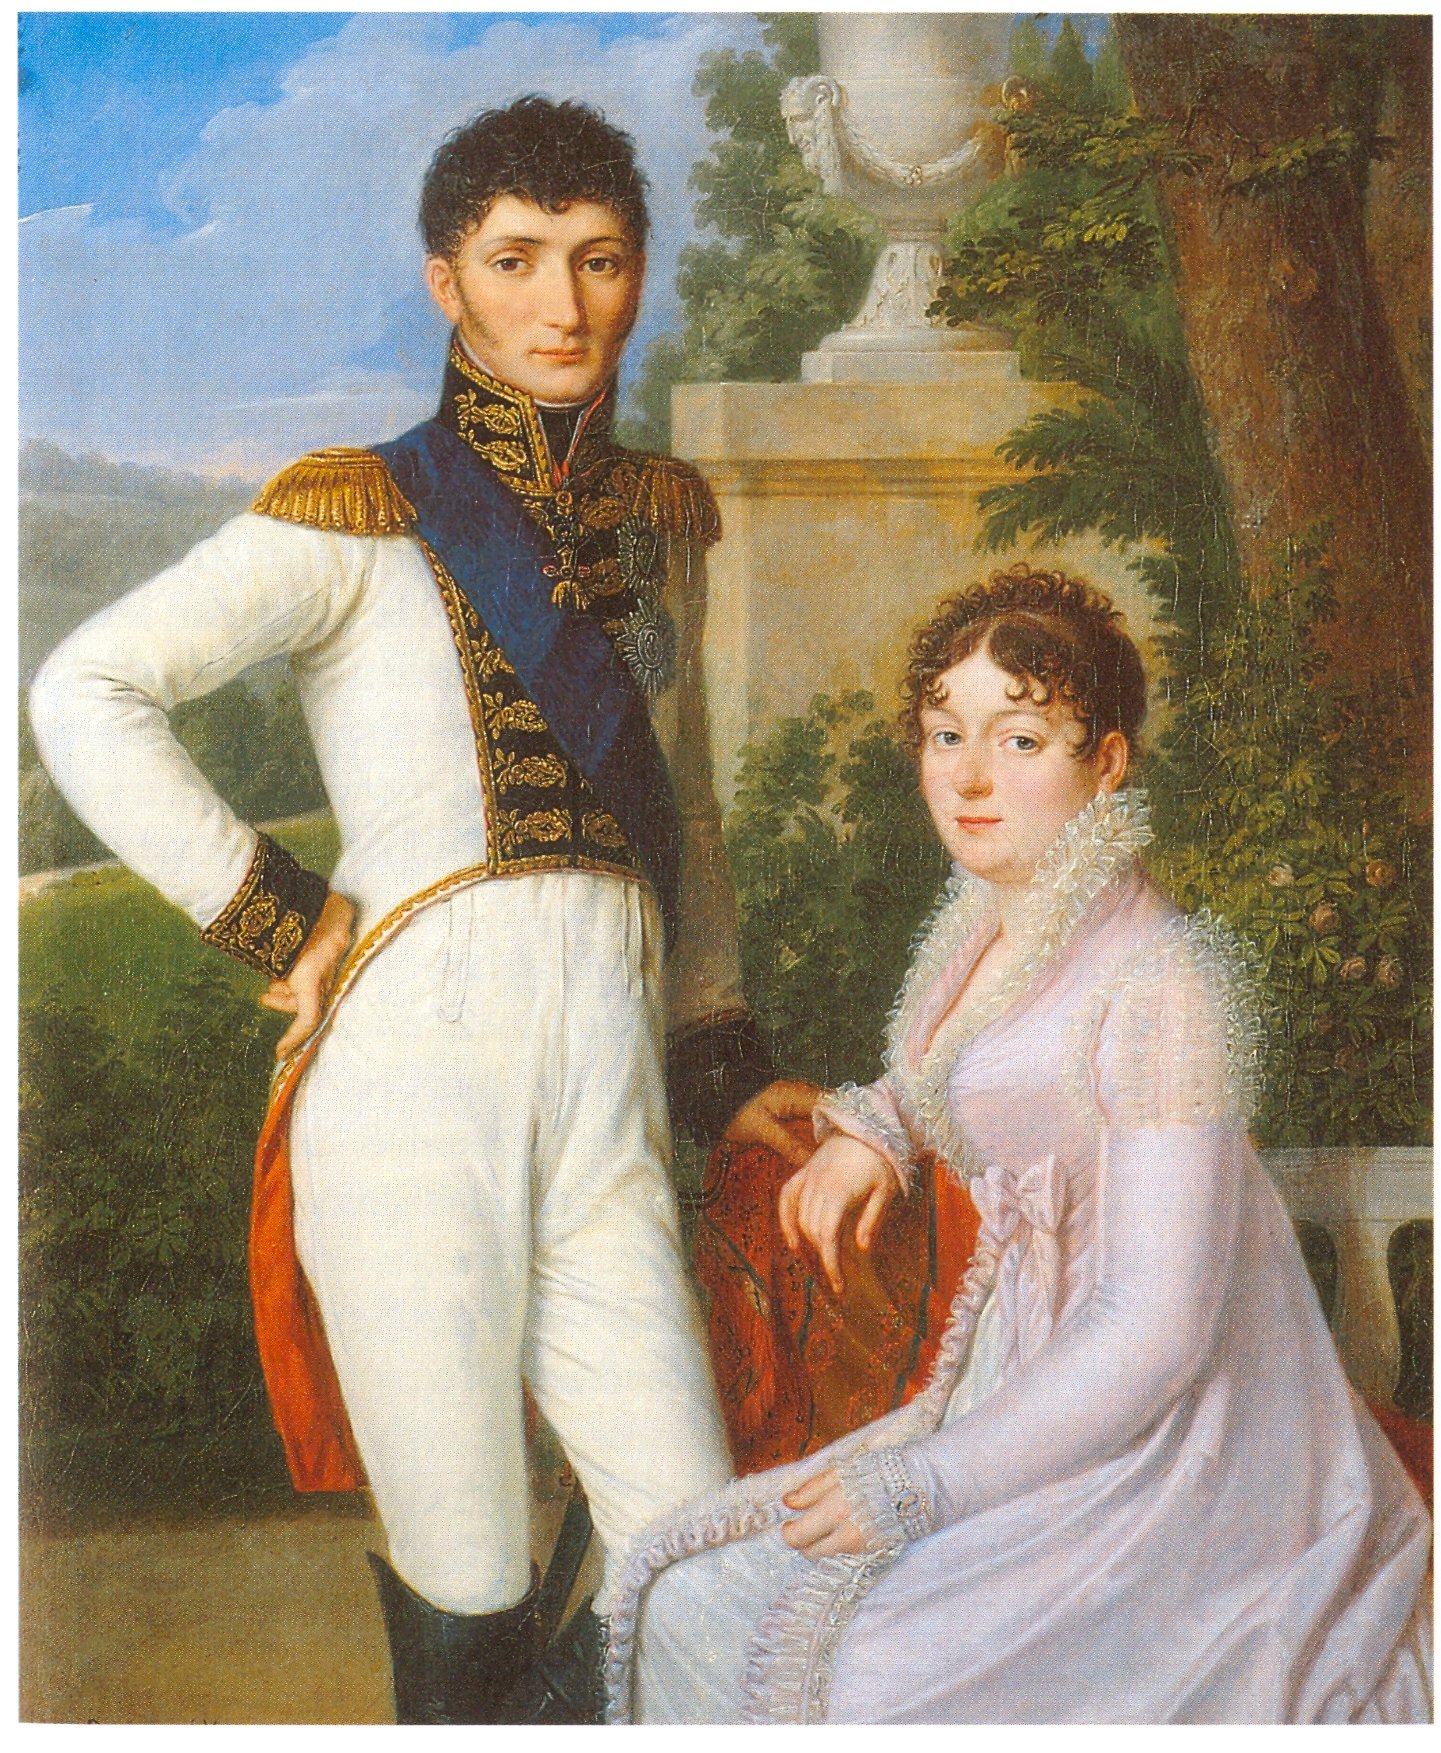 jerome napoleon bonaparte ii wife